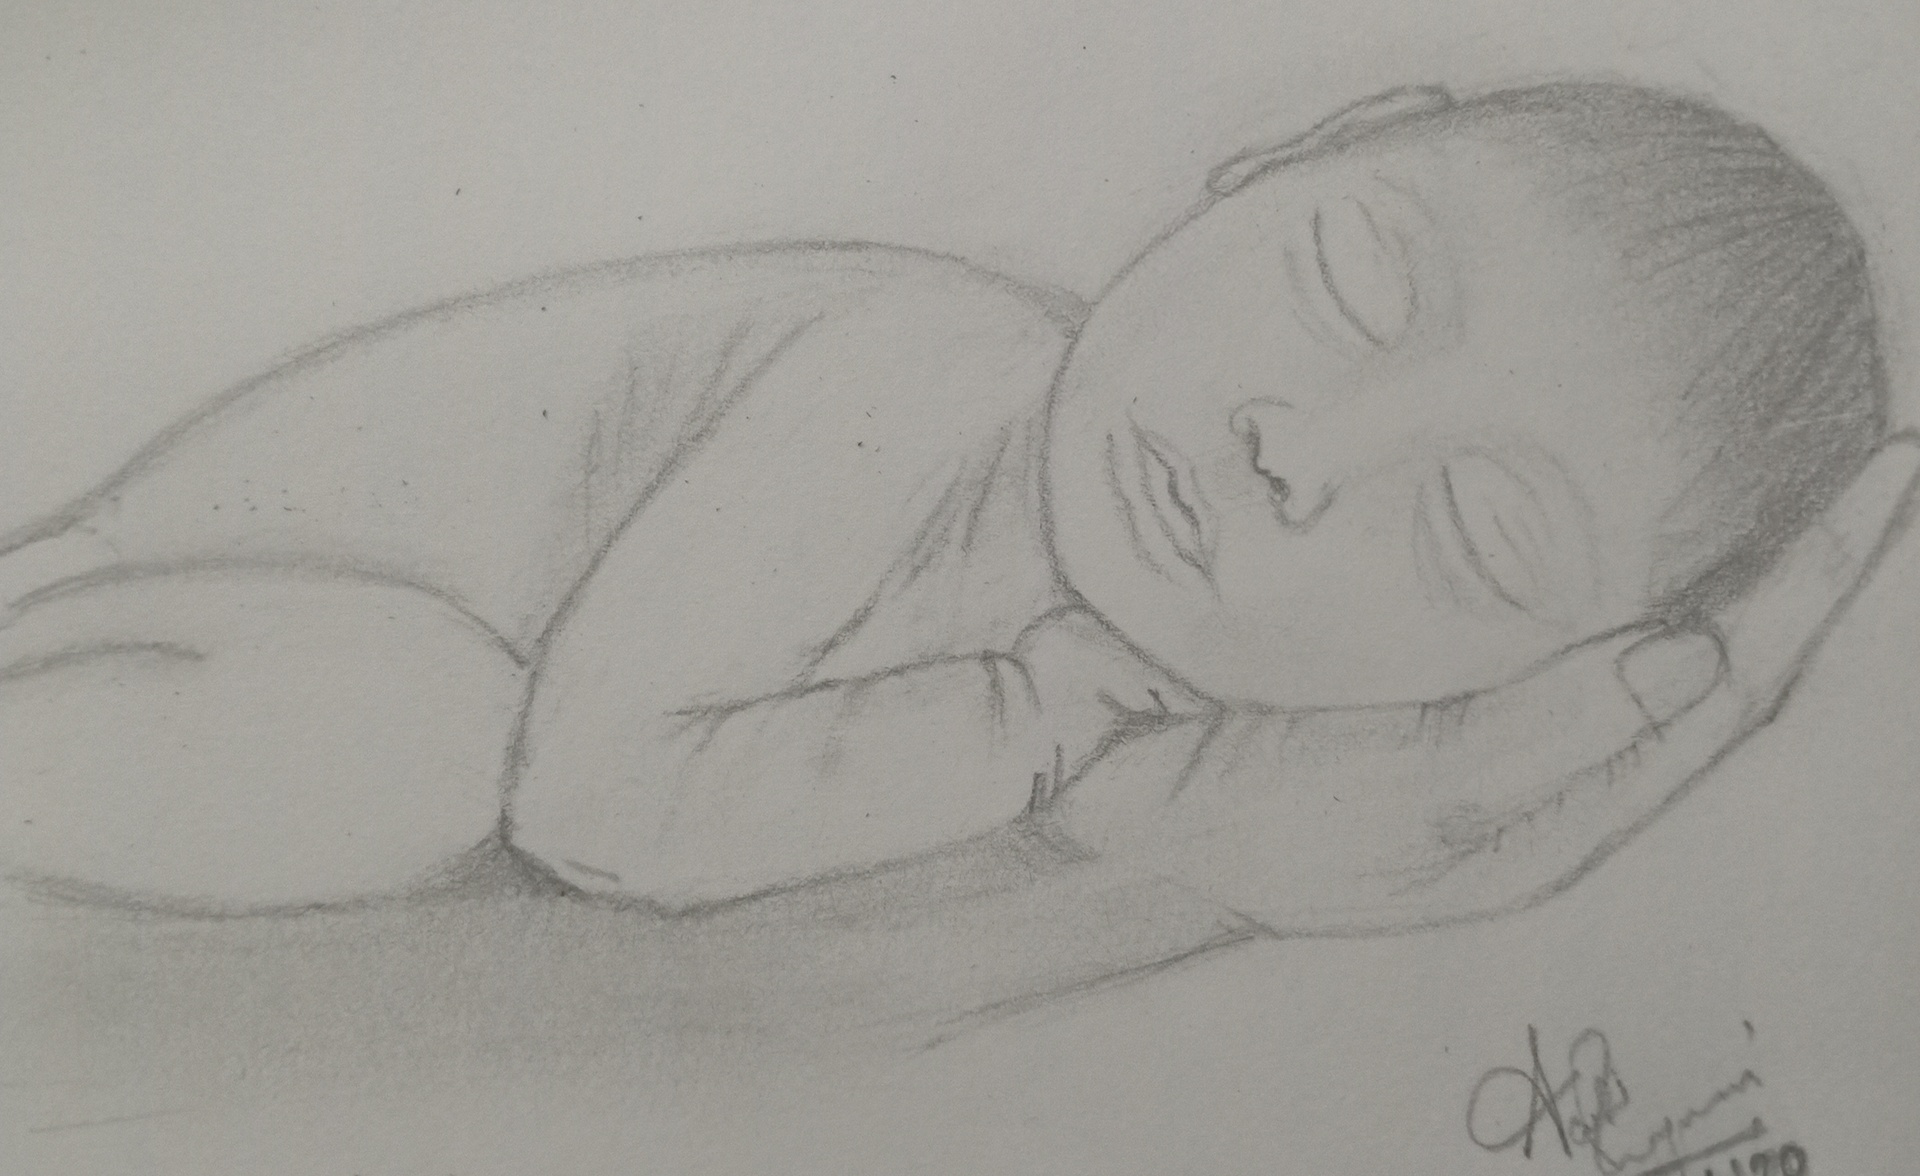 Simple pencil sketch of a sleeping baby